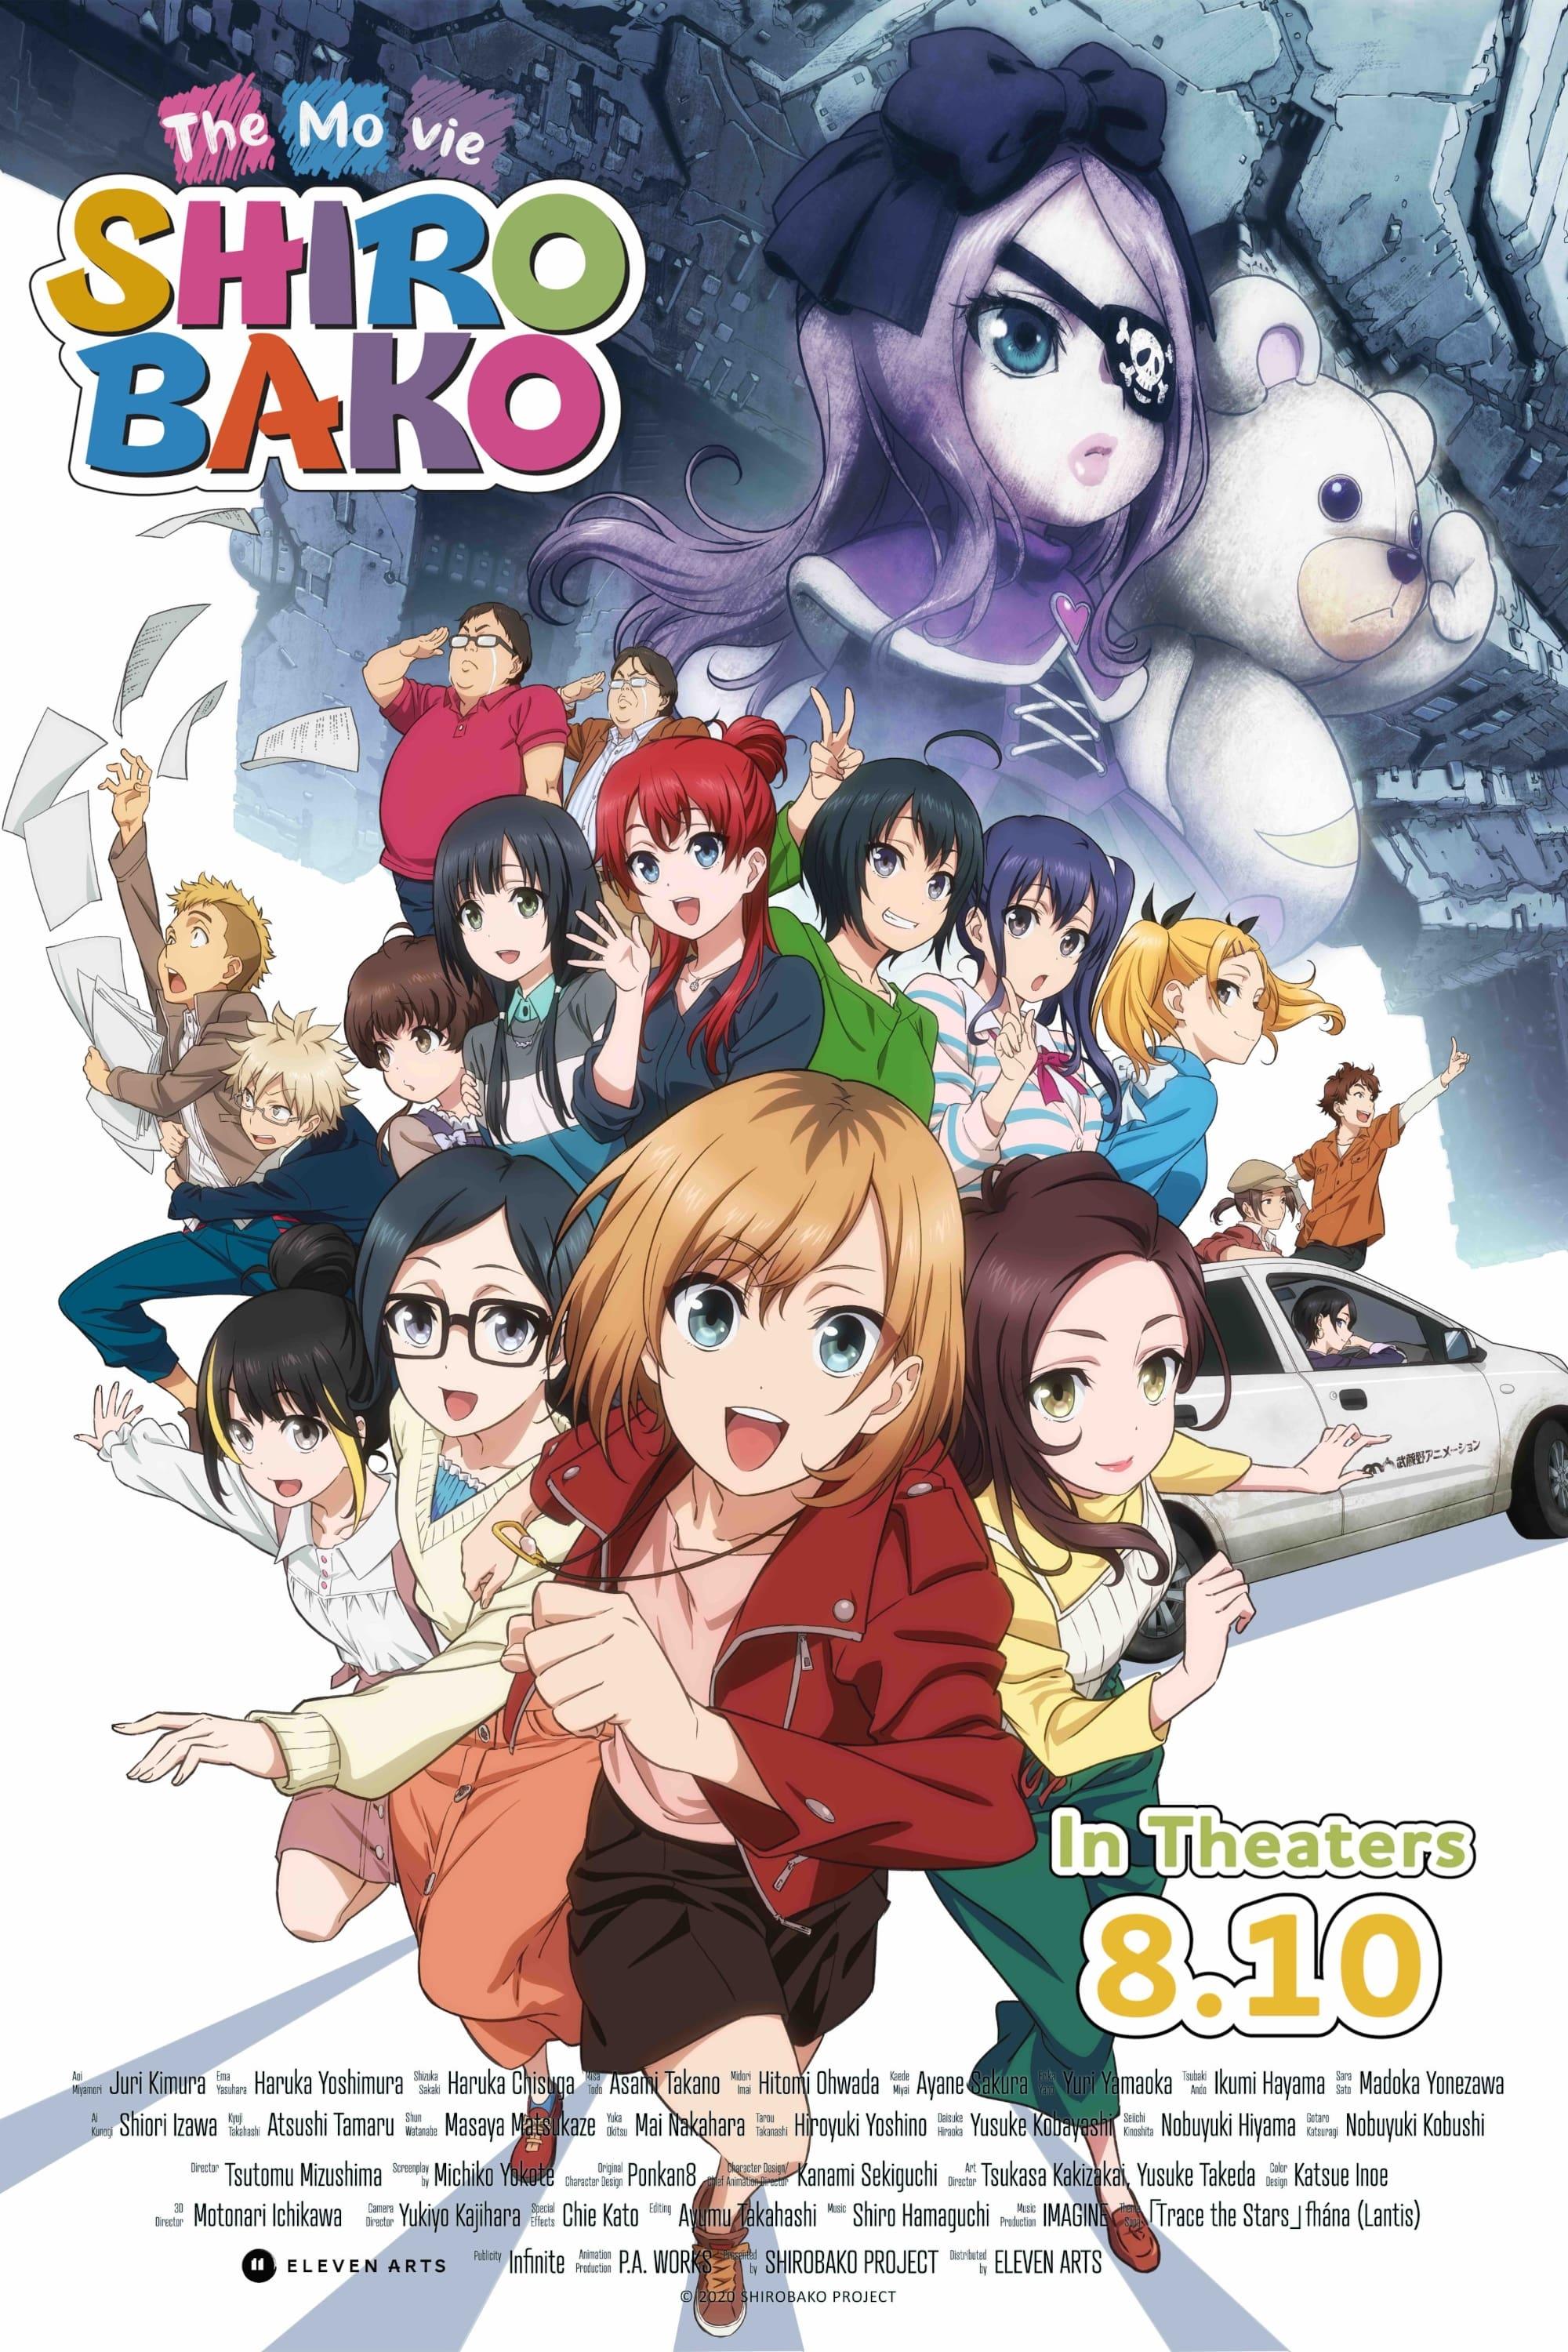 SHIROBAKO The Movie poster